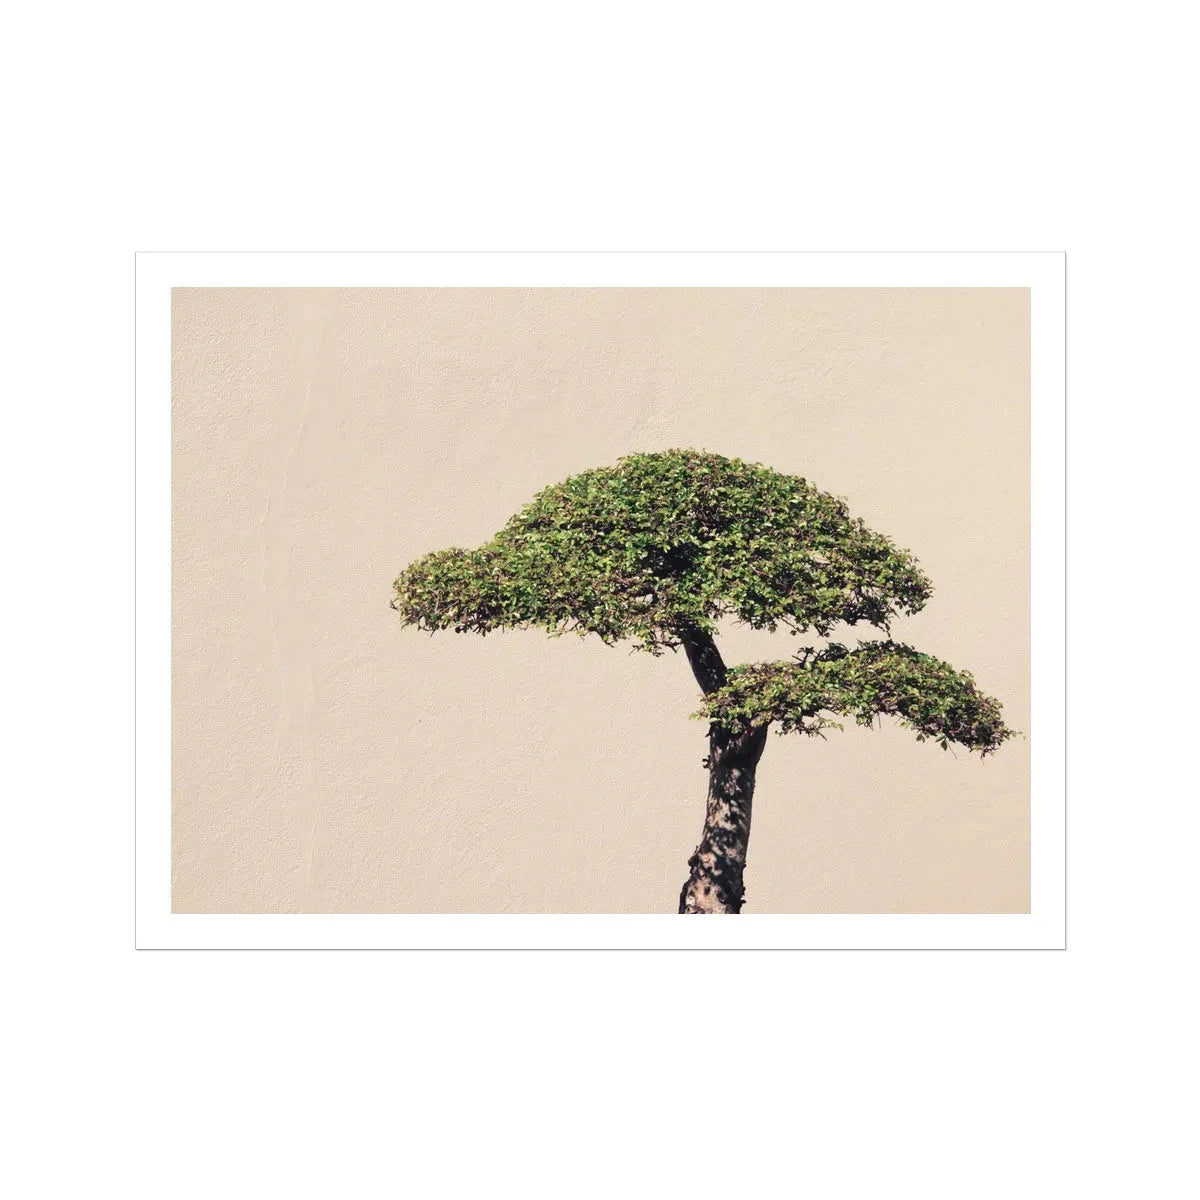 Me Myself & Bonsai Tree Print - Modern Botanical Art - 40’x30’ - Posters Prints & Visual Artwork - Aesthetic Art